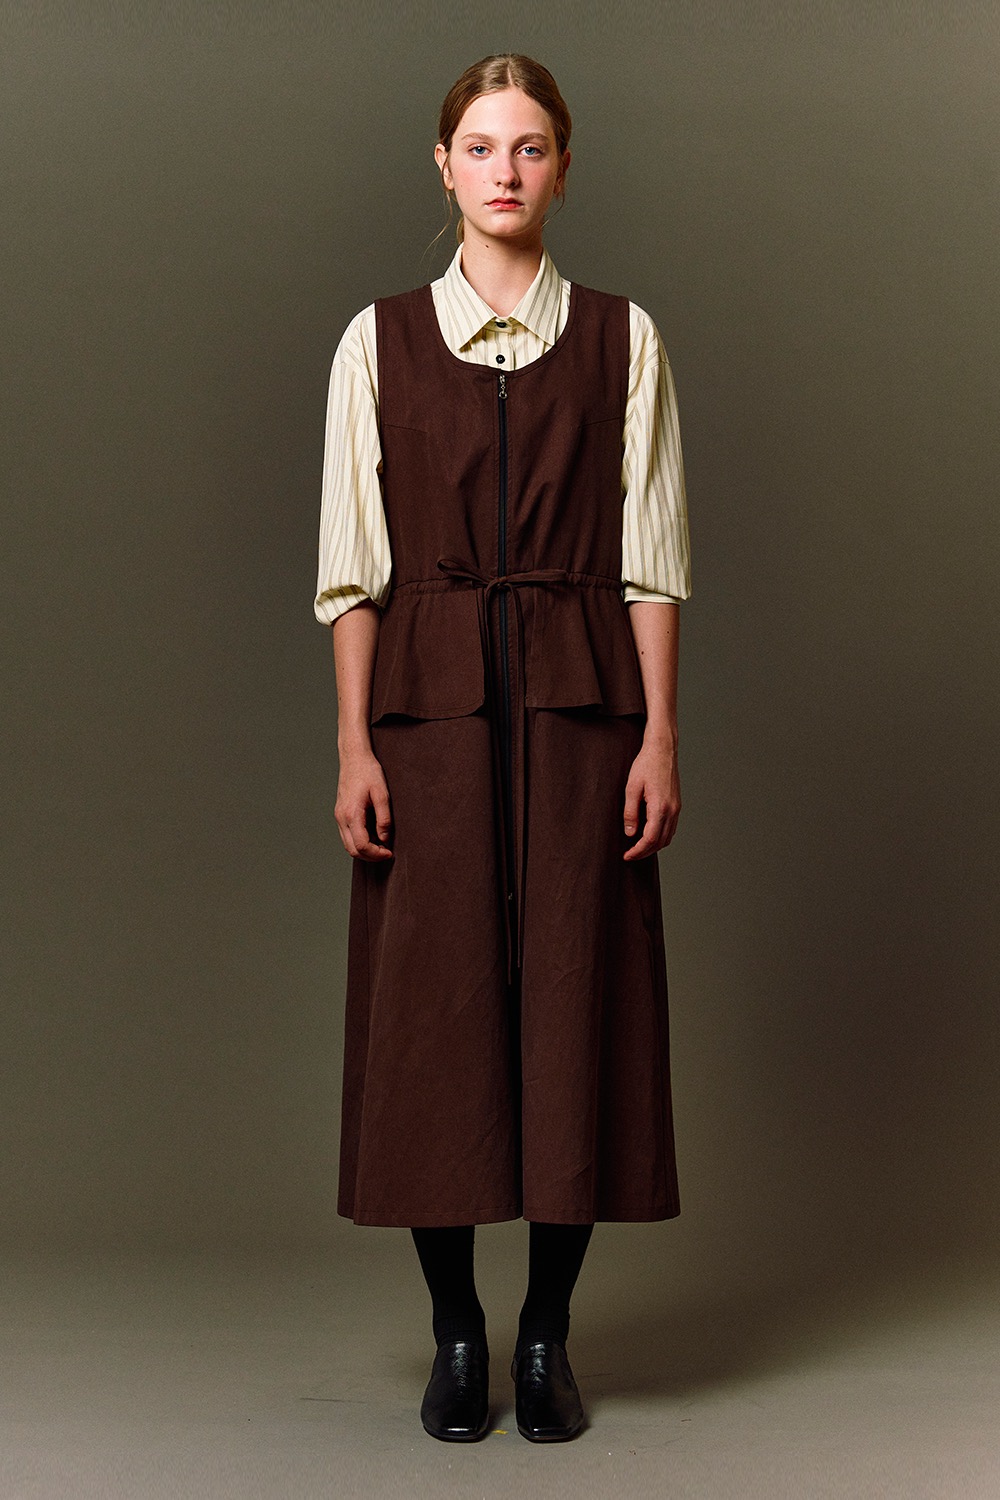 brown maxi dress